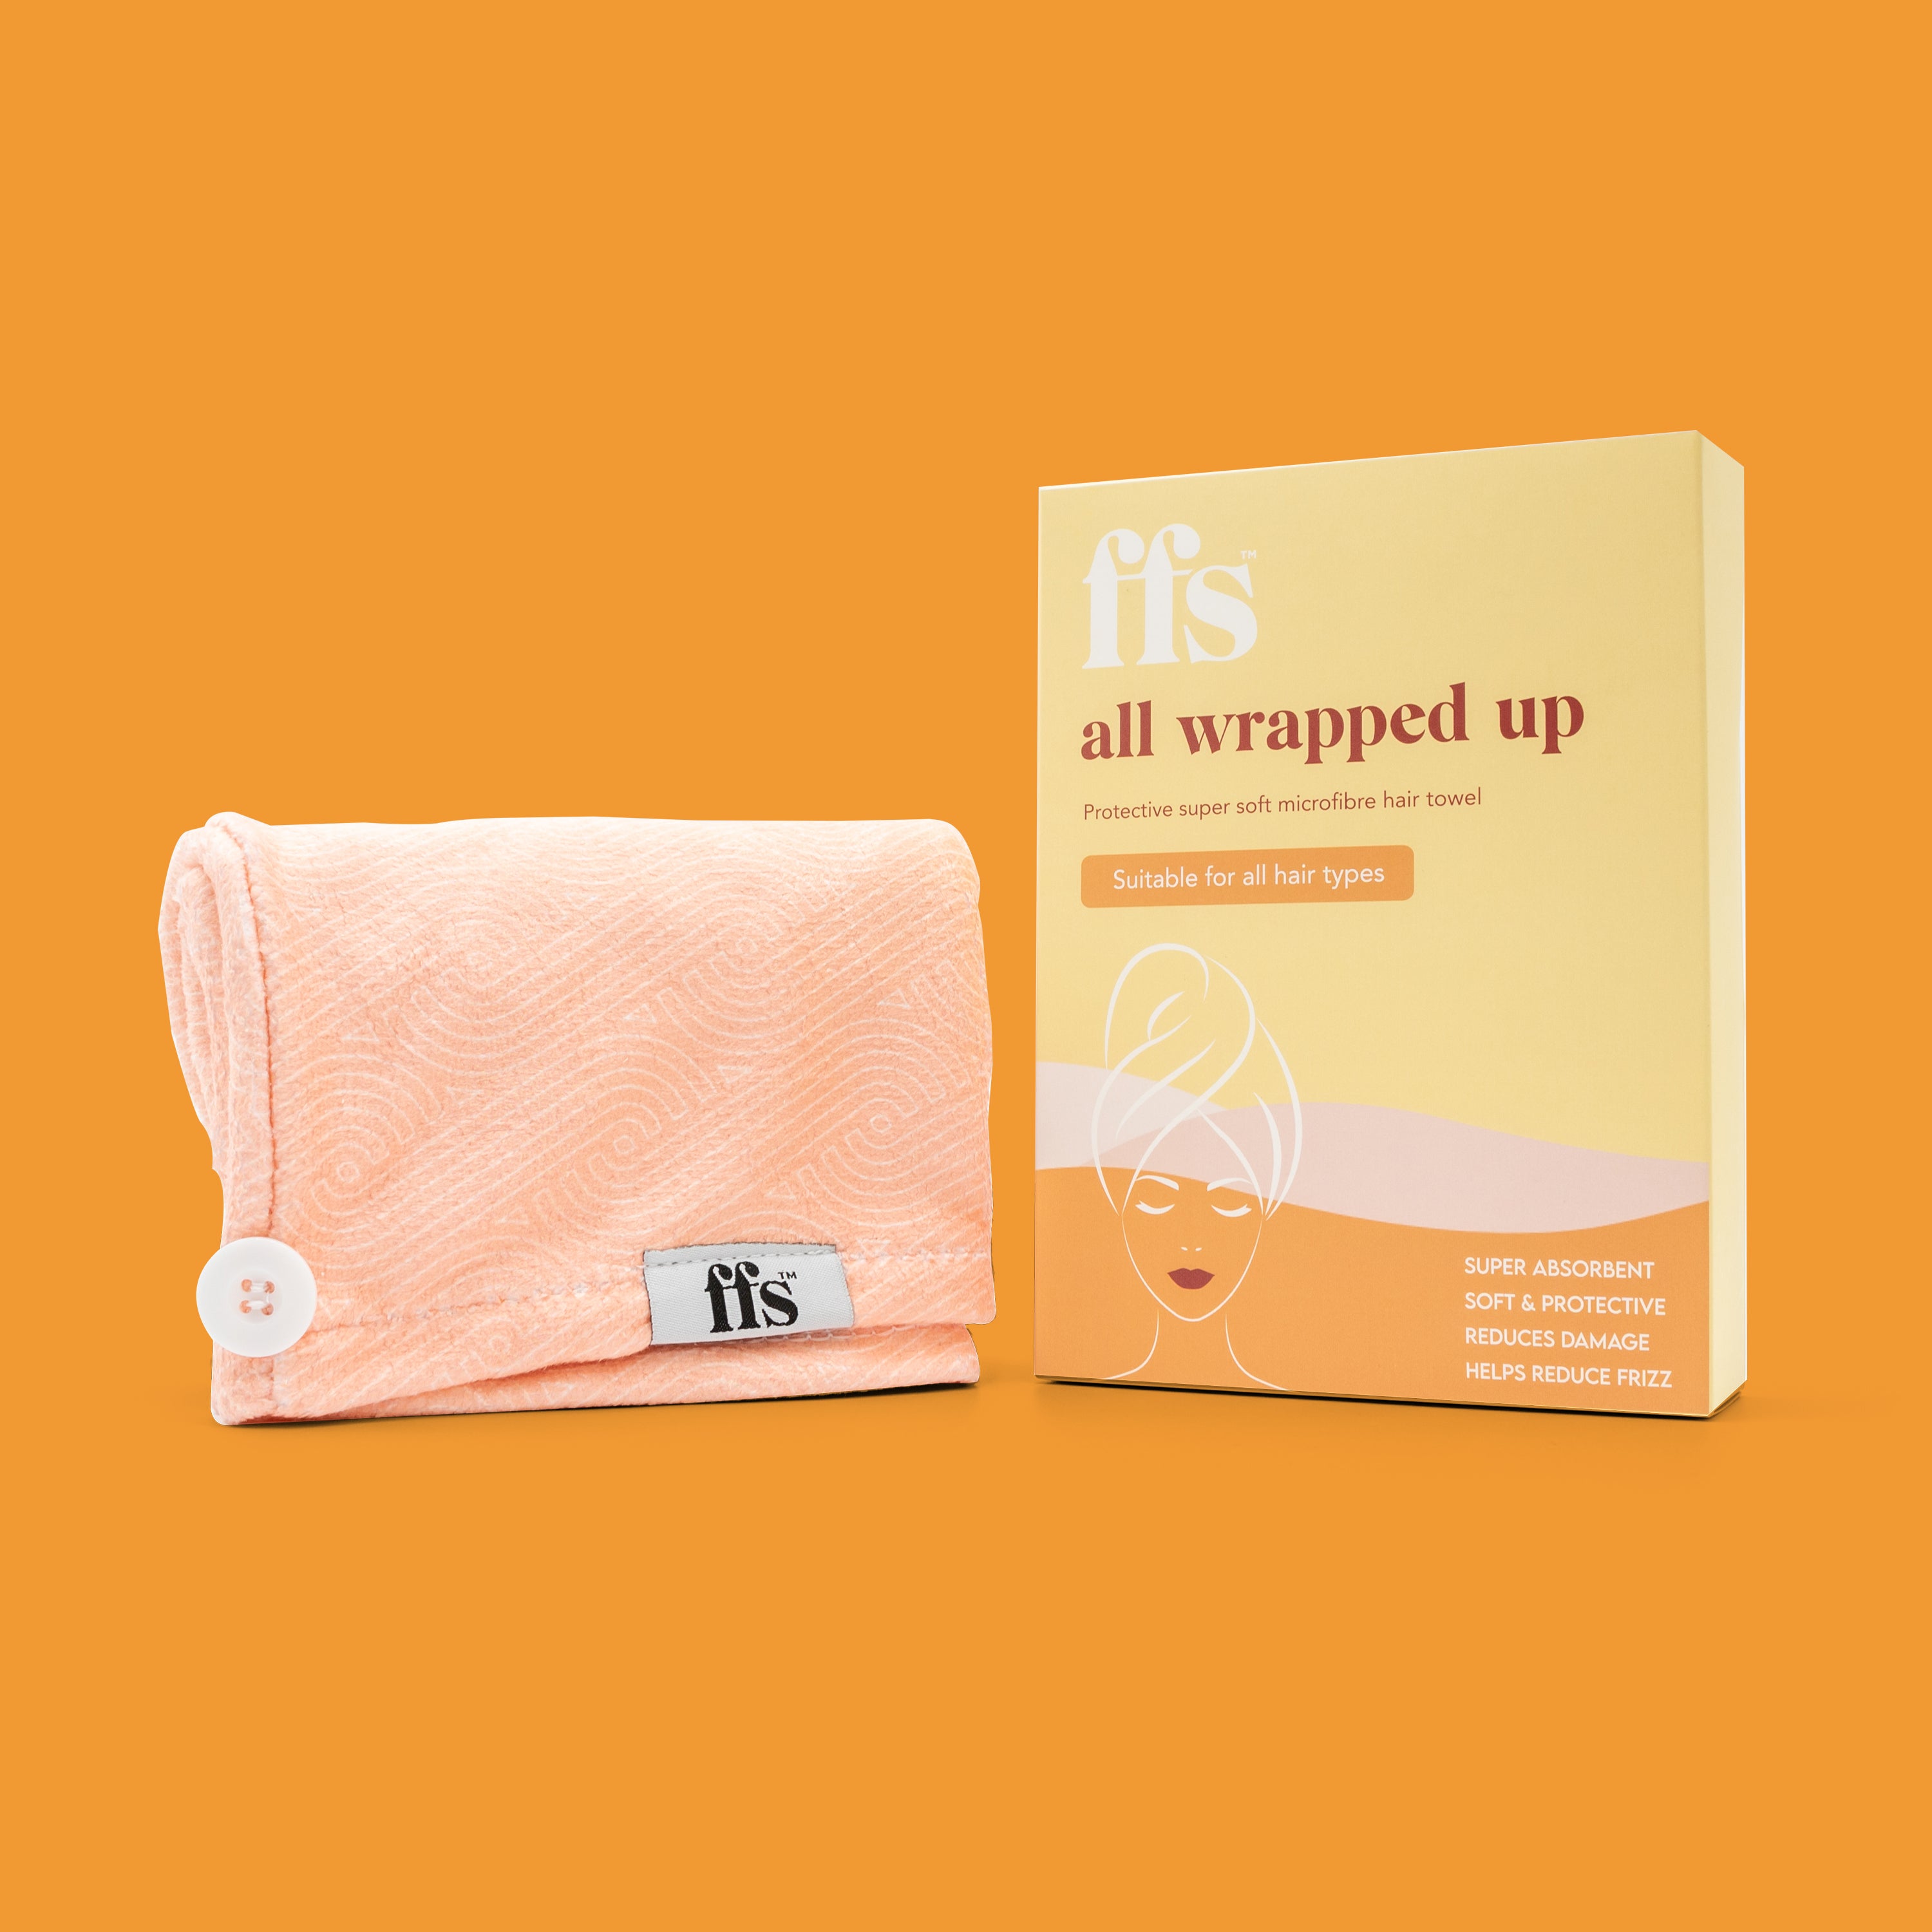 Super Absorbent Hair Towel